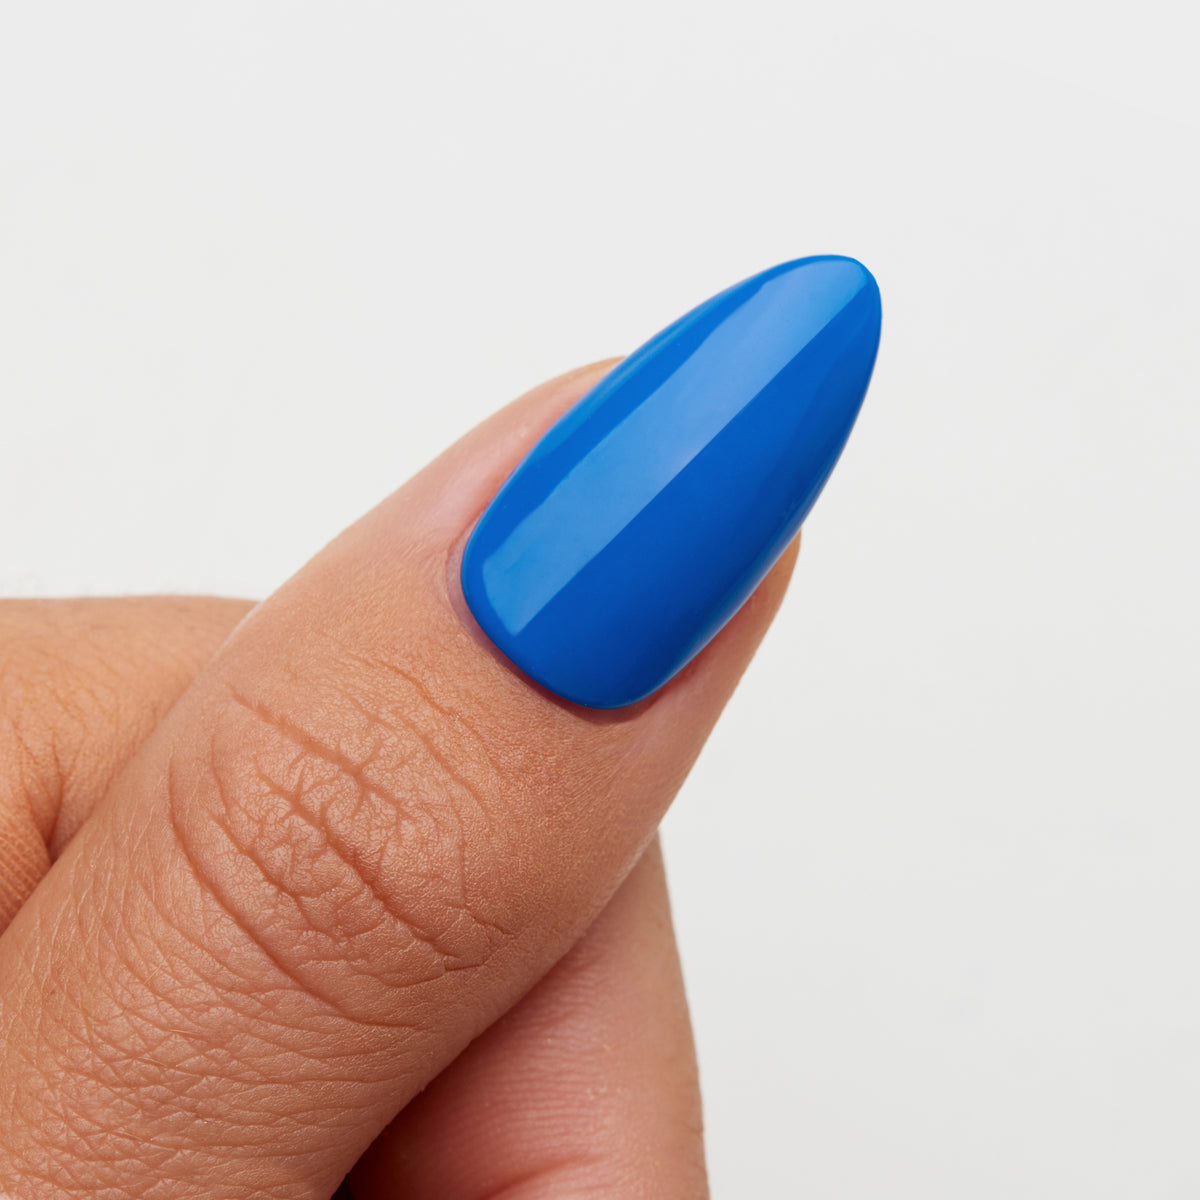 Gelous Vitamin Sea gel nail polish swatch - photographed in Australia